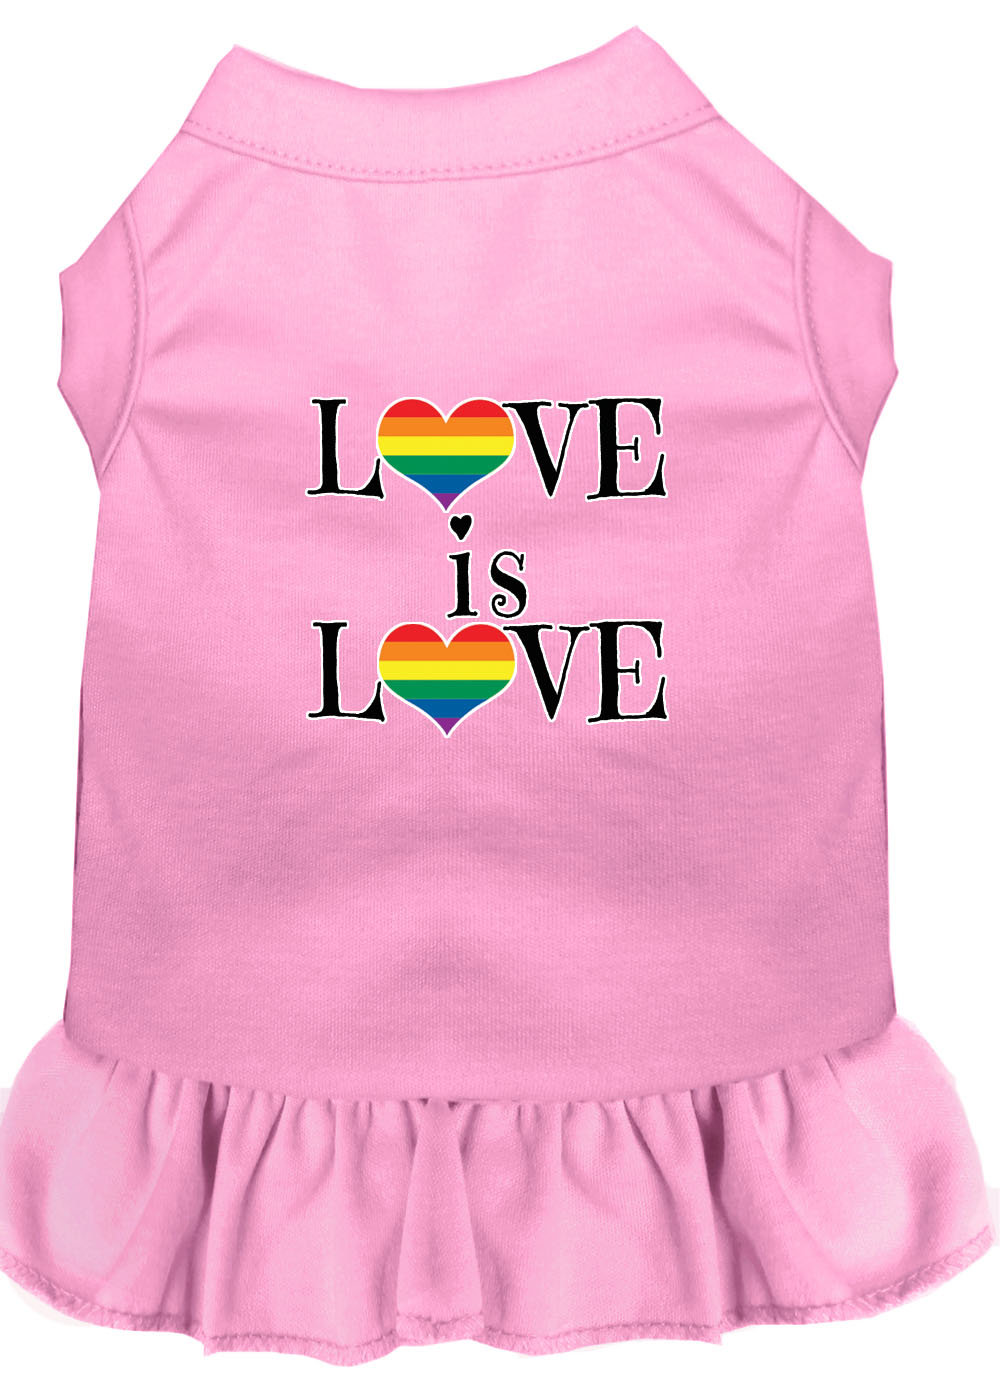 Love is Love Screen Print Dog Dress Light Pink XXL